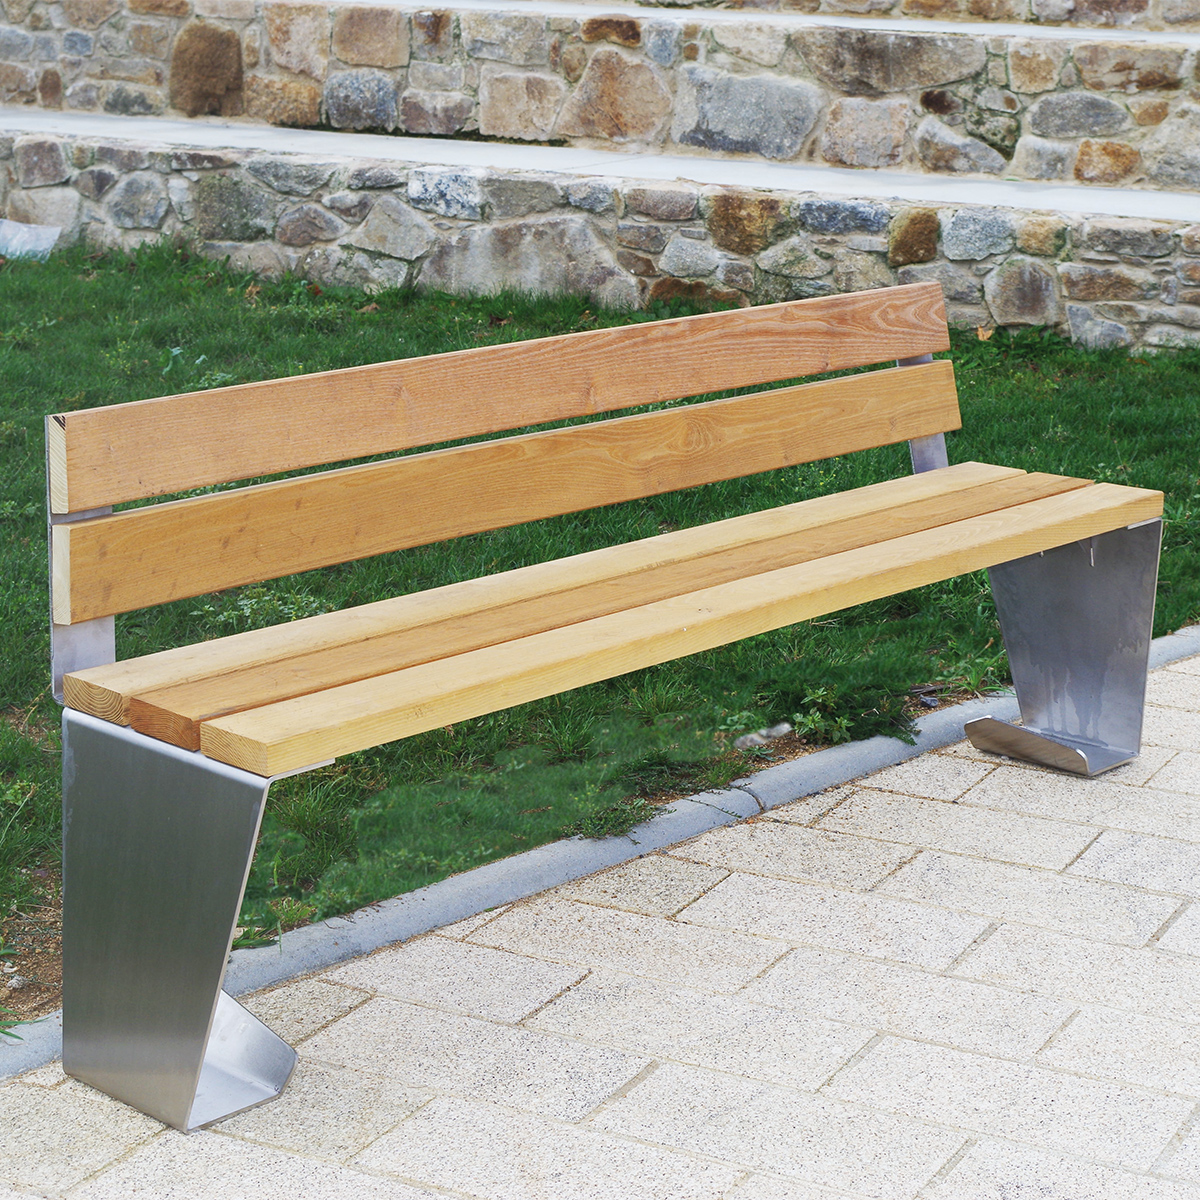 ATECH-public-square-design-bench-street-furniture-origami